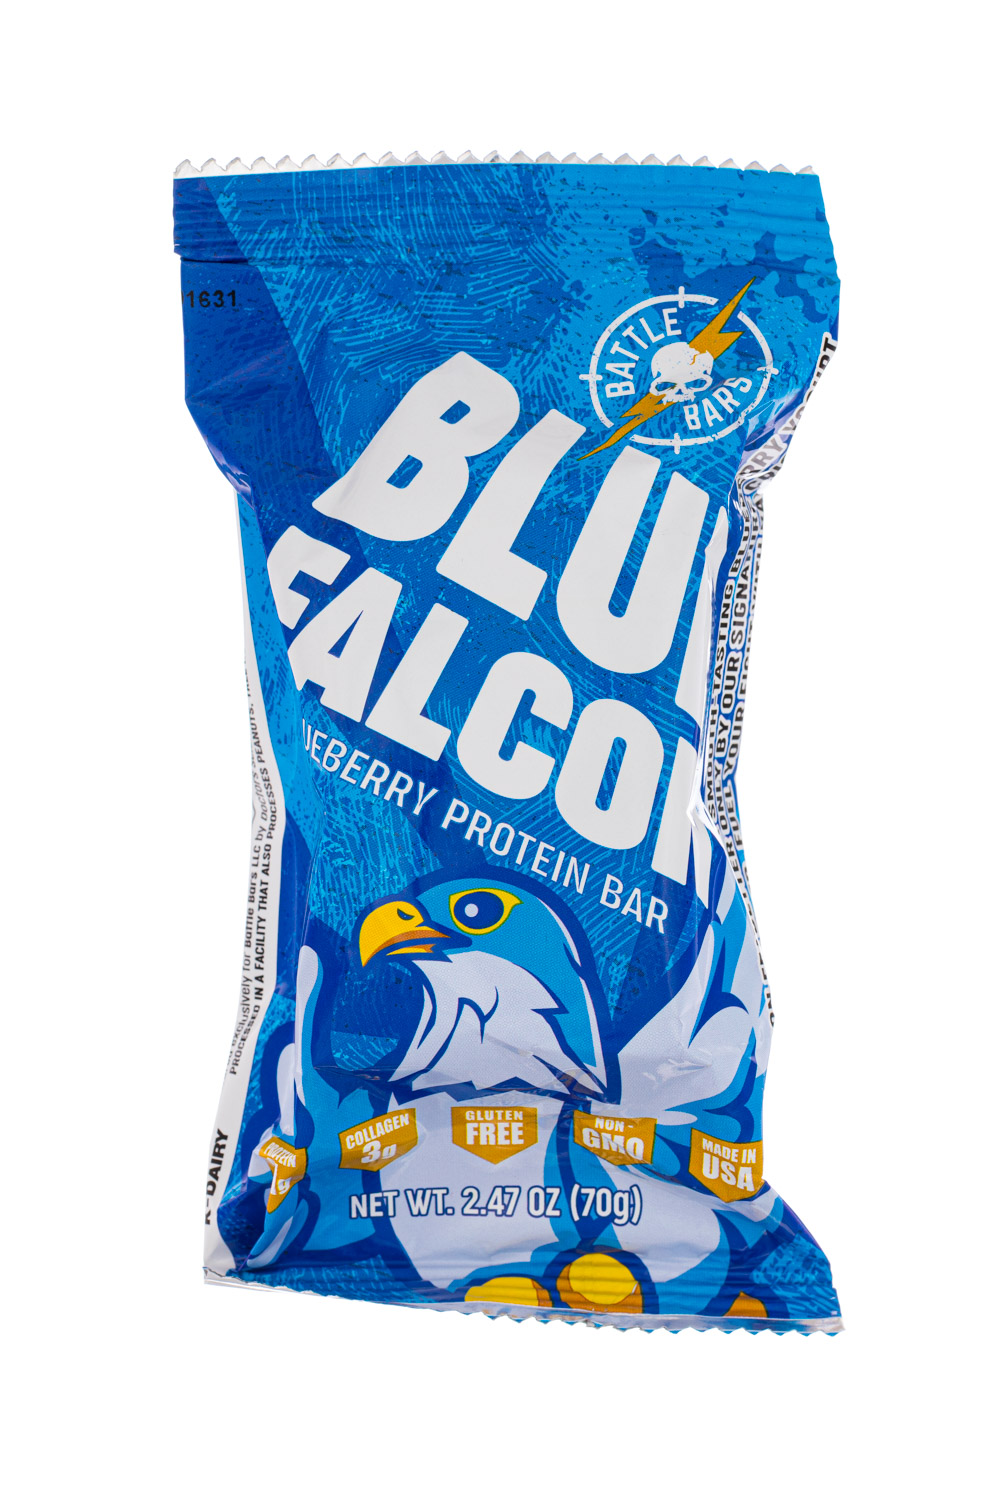 Blue Falcon: Blueberry Protein Bar